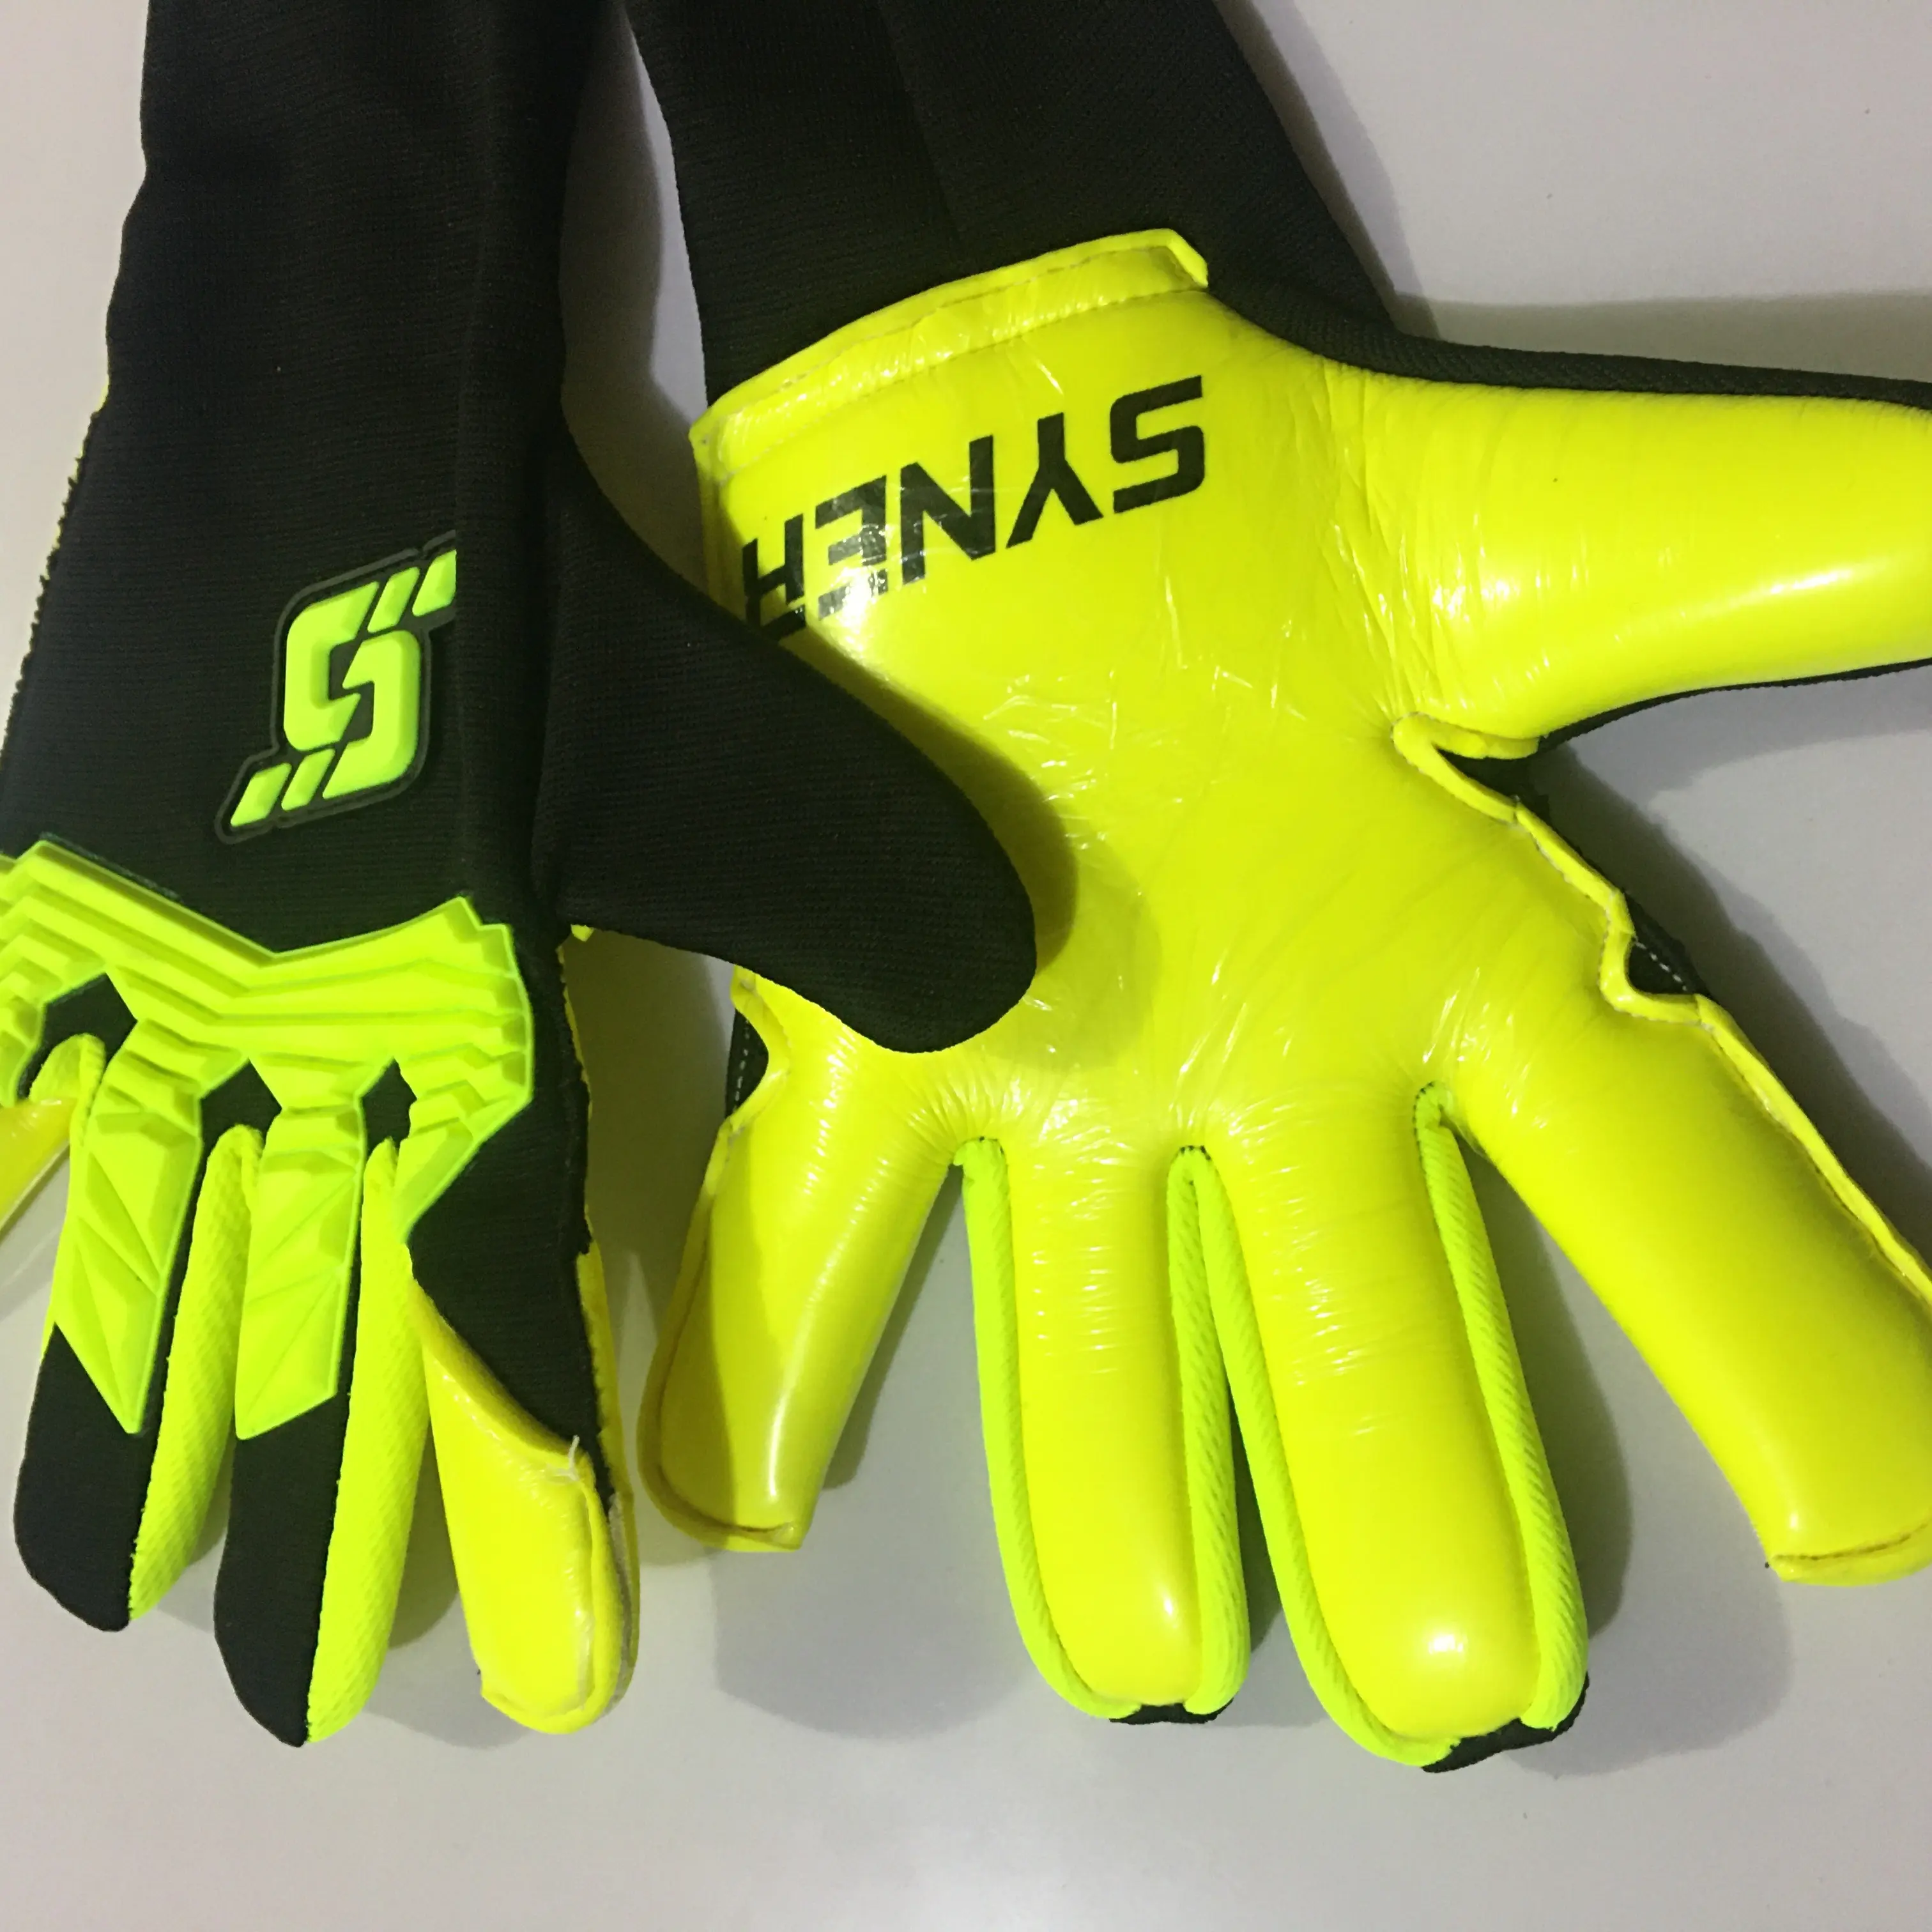 New Model contact latex Custom Goalkeeper Gloves Football Goalie Wear High Gripping Breathable Professional vipor grip 3 vg3